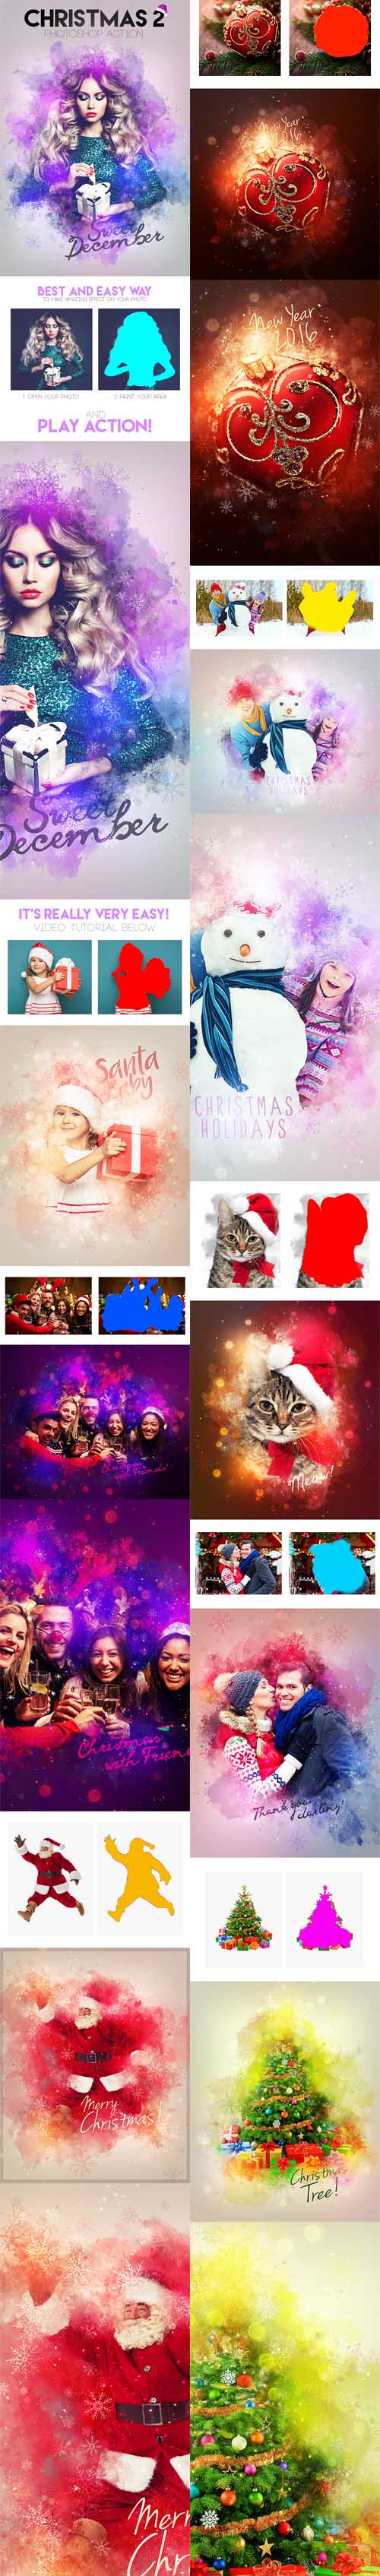 GraphicRiver - Christmas 2 Photoshop Action 13813427